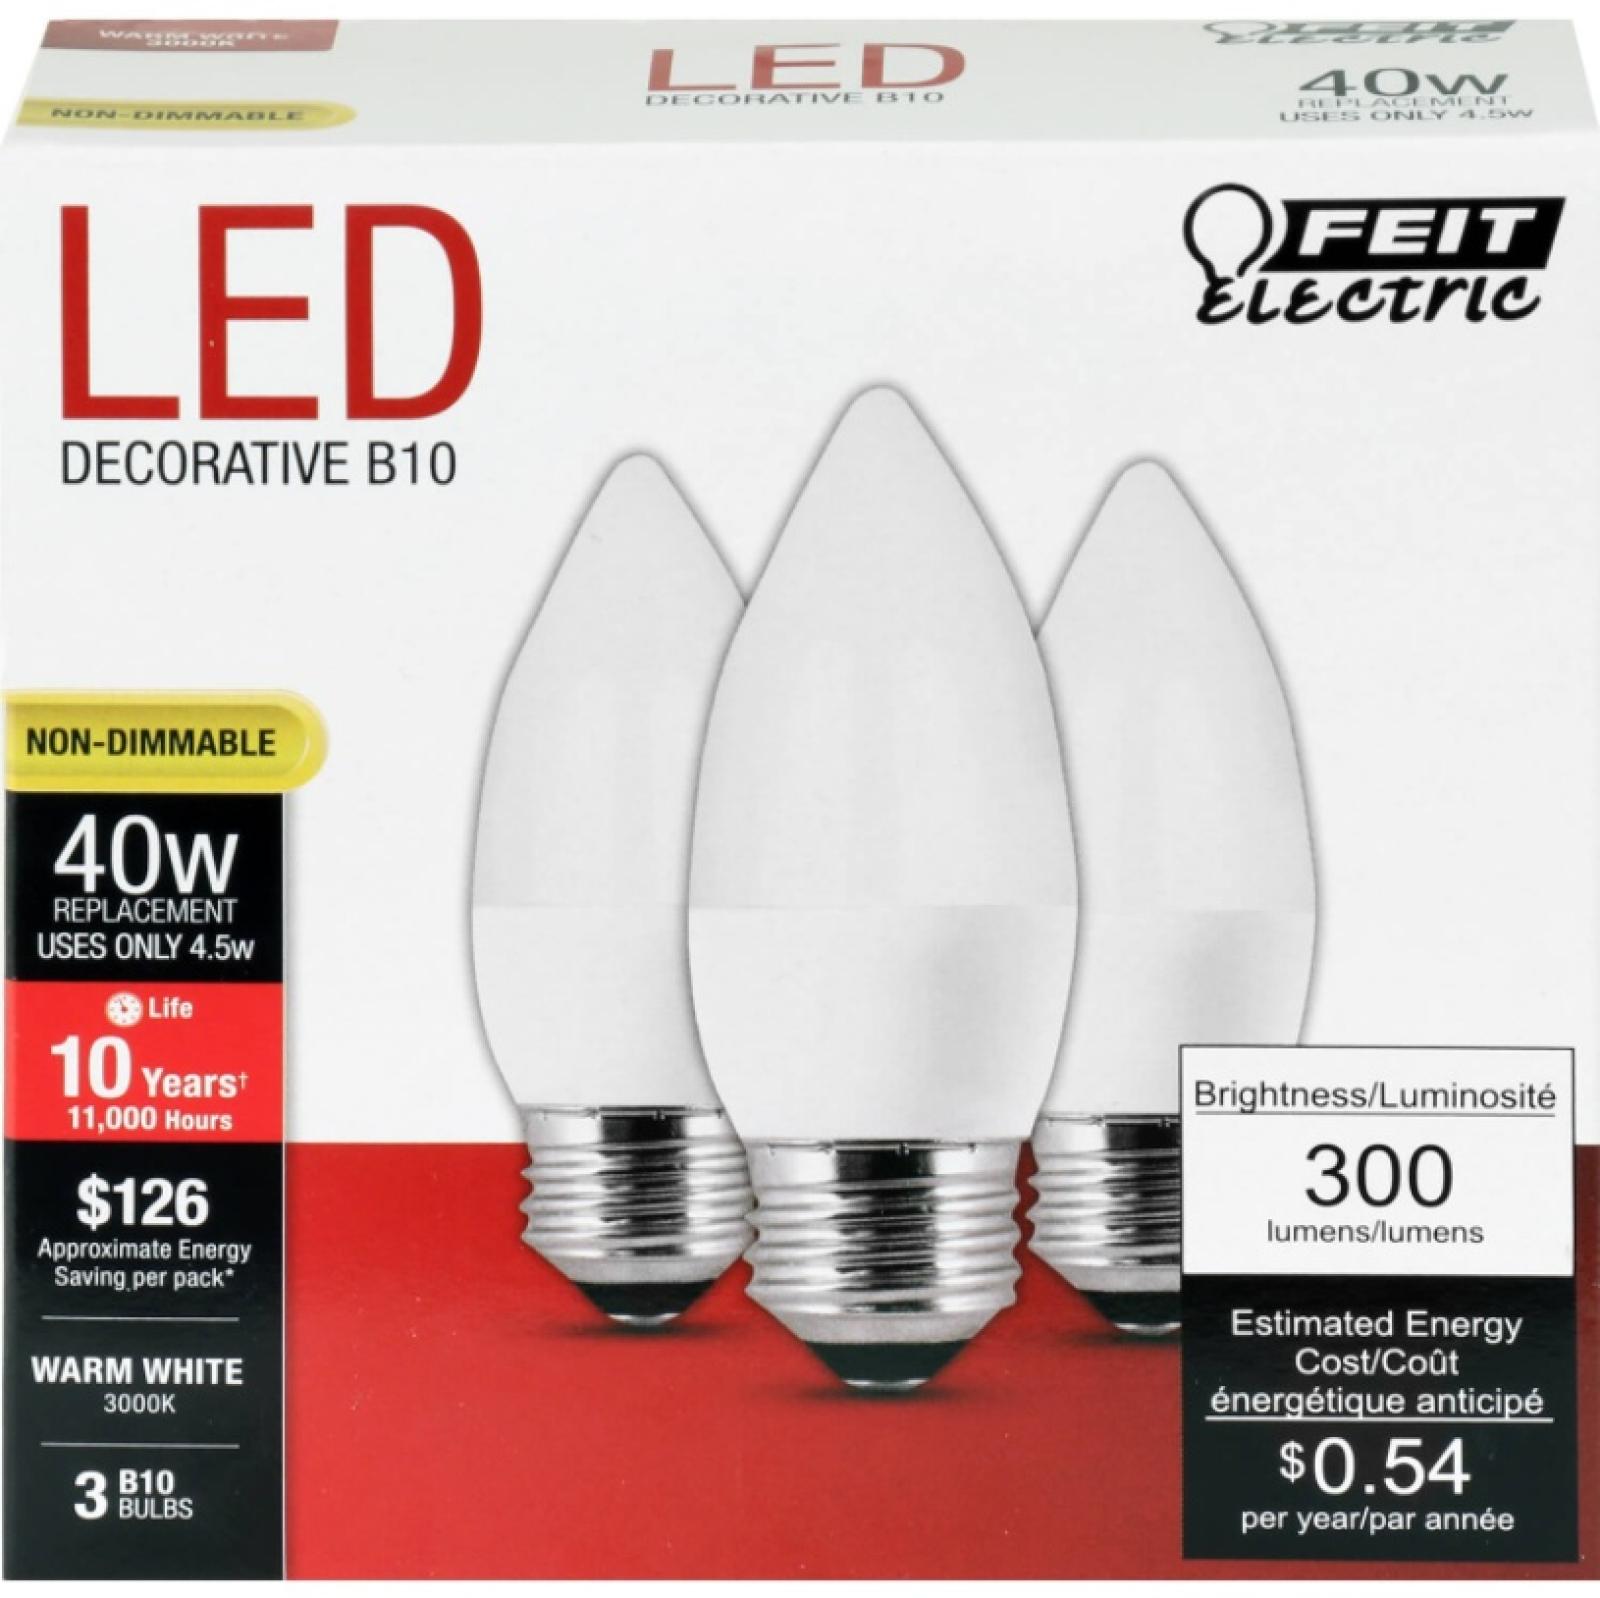 Feit Electric LED 40 Watt Equivalent 300 Lumen Non-Dimmable Light Bulb (3 Pack)